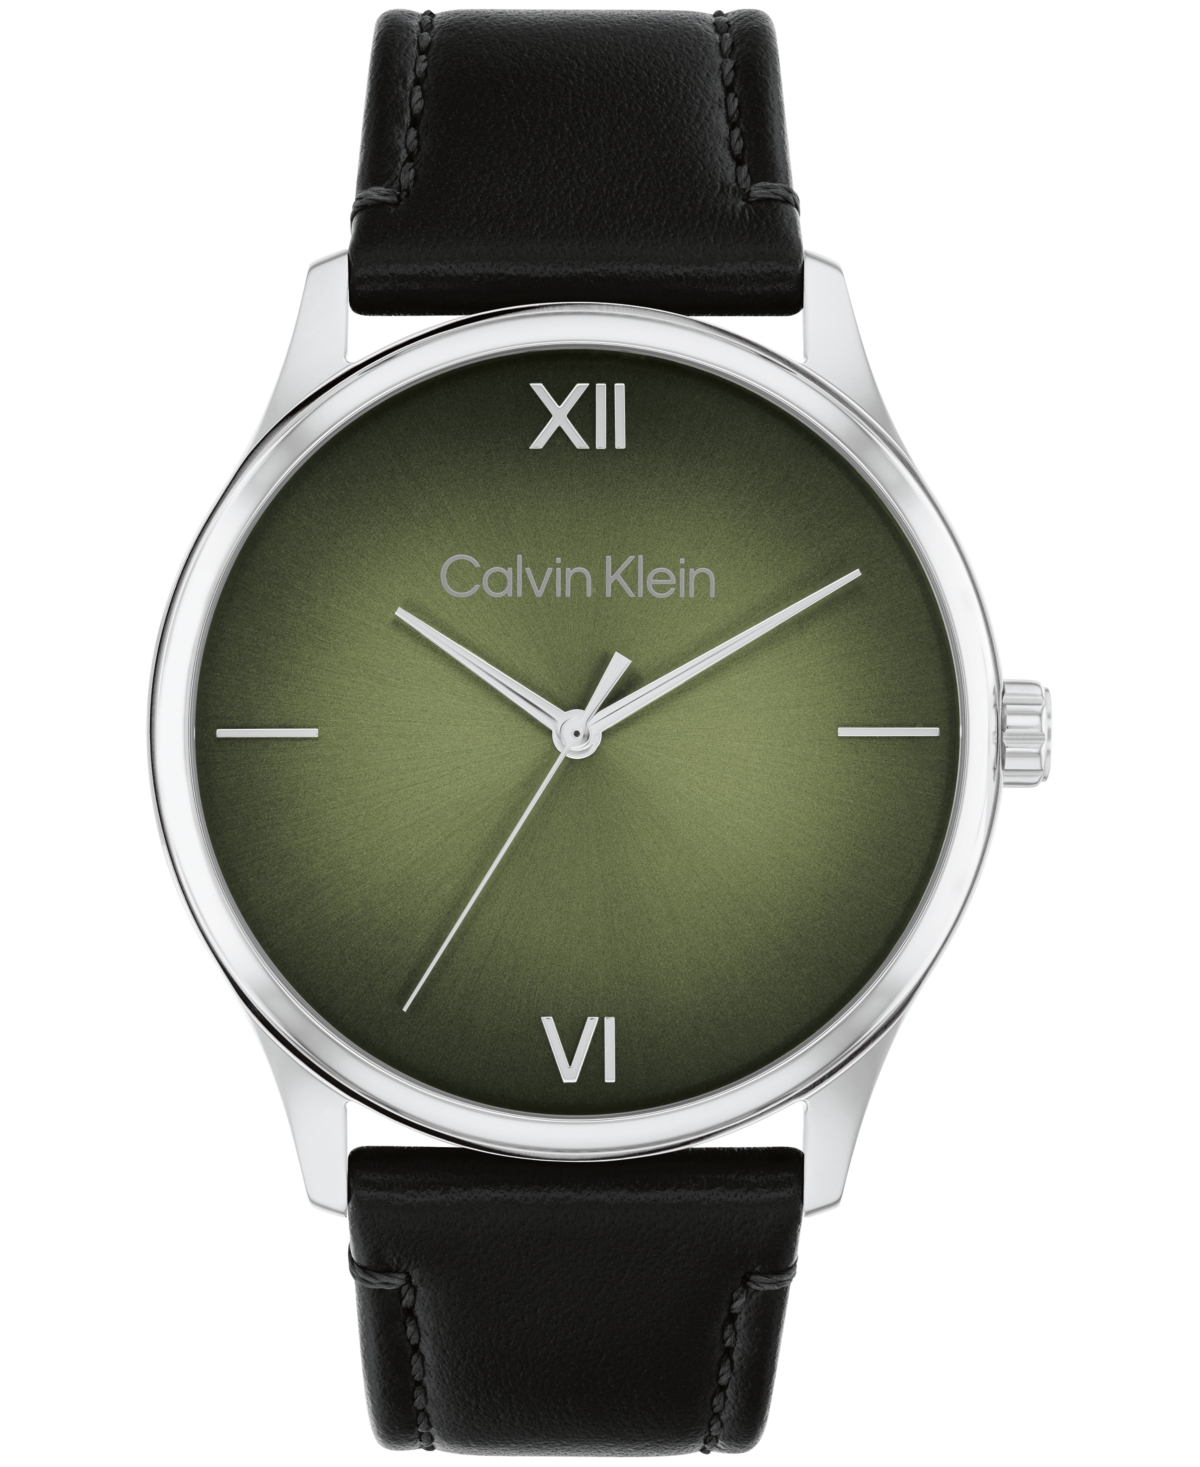 Calvin Klein Men's Ascend Black Leather Strap Watch 43mm